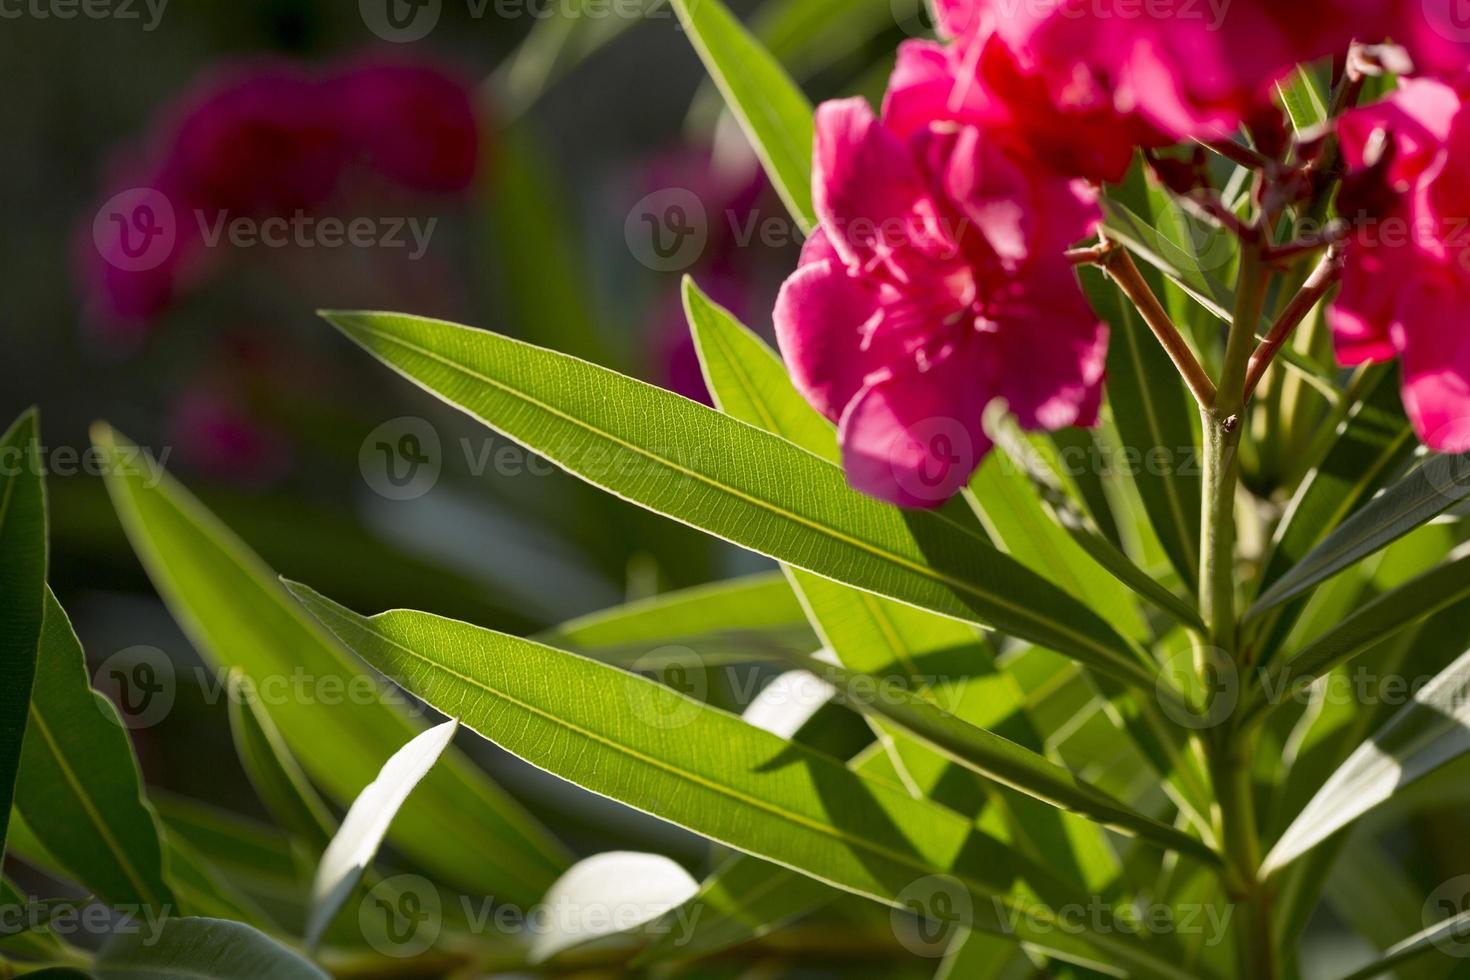 loendro com flores rosa na província de valladolid em castilla y leon, espanha foto